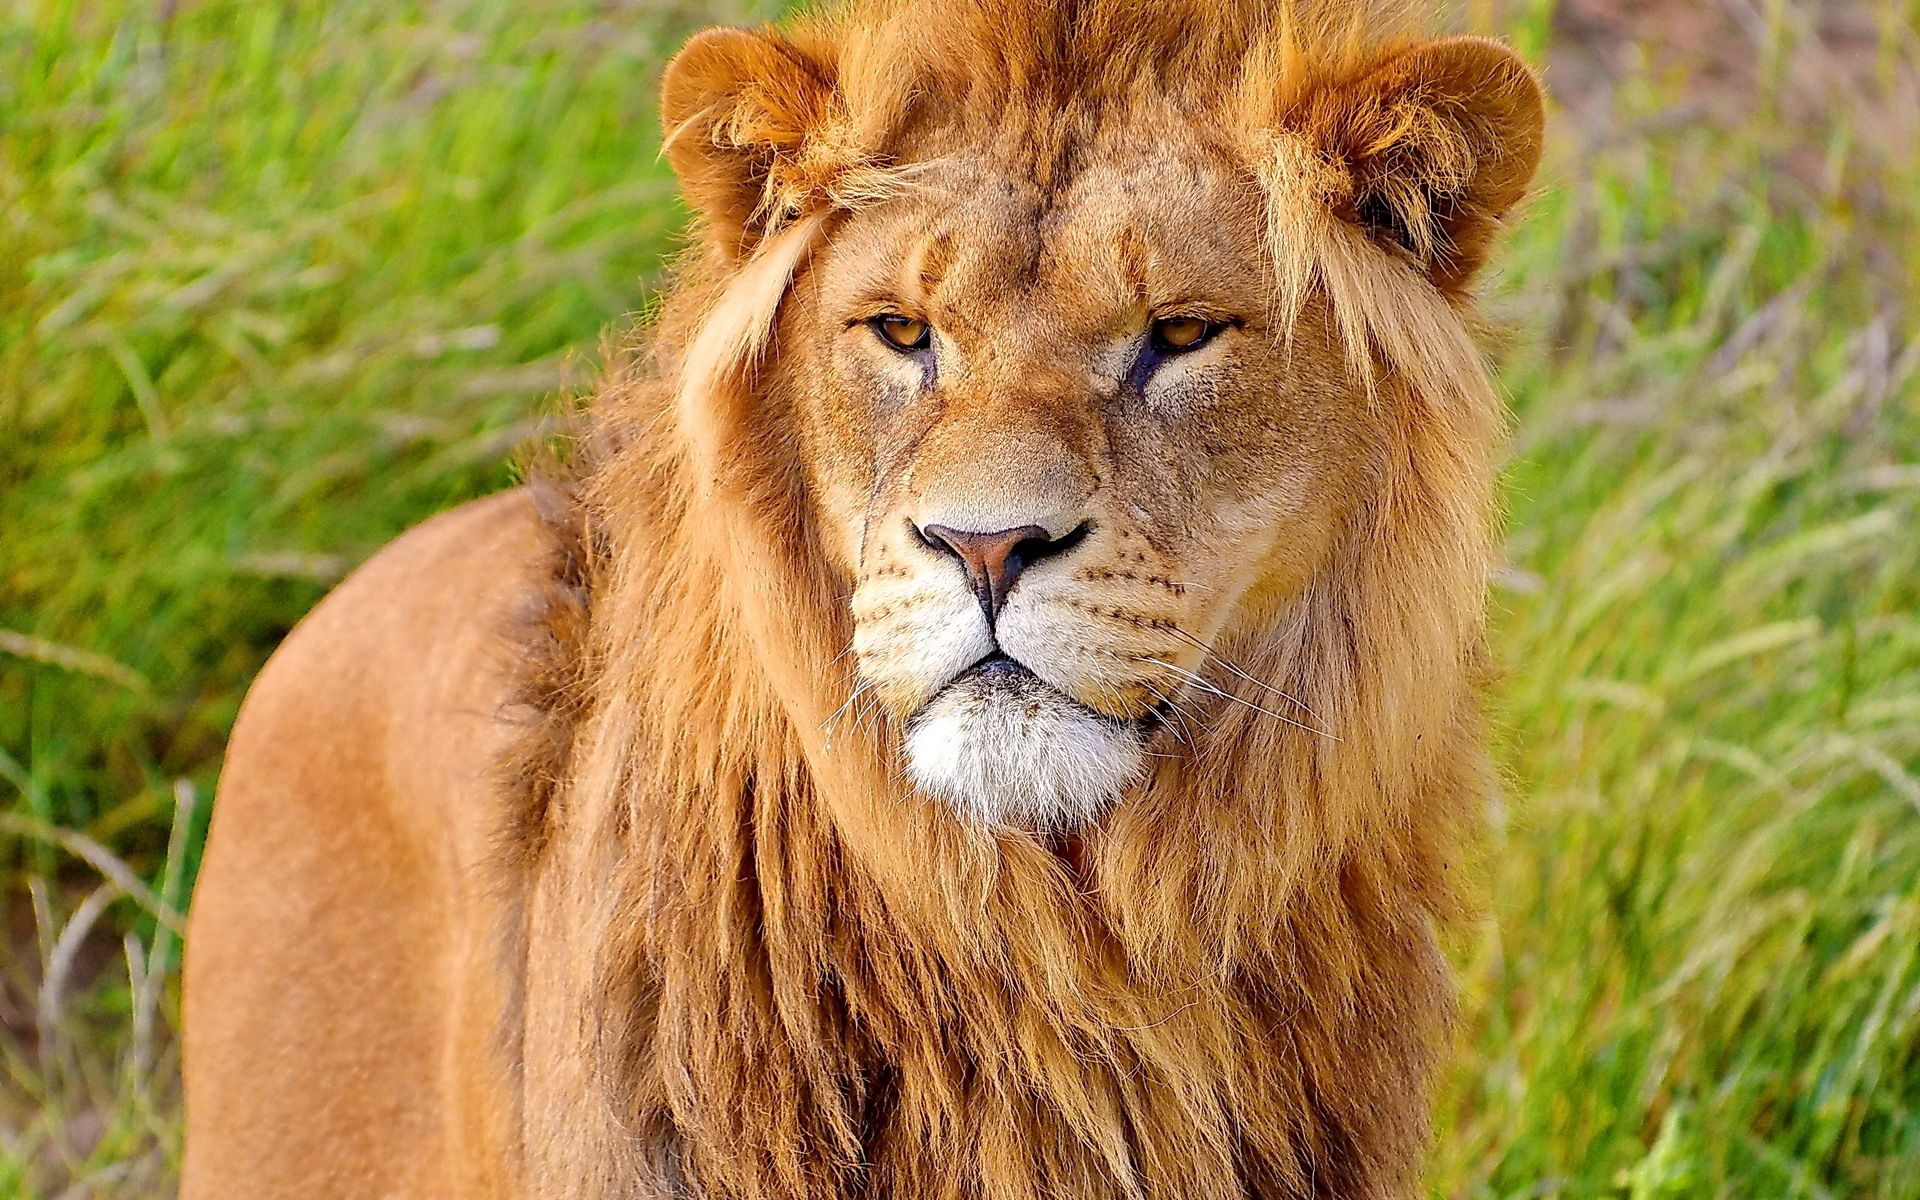 126945 descargar imagen animales, bozal, un leon, león, depredador, gato grande, melena: fondos de pantalla y protectores de pantalla gratis